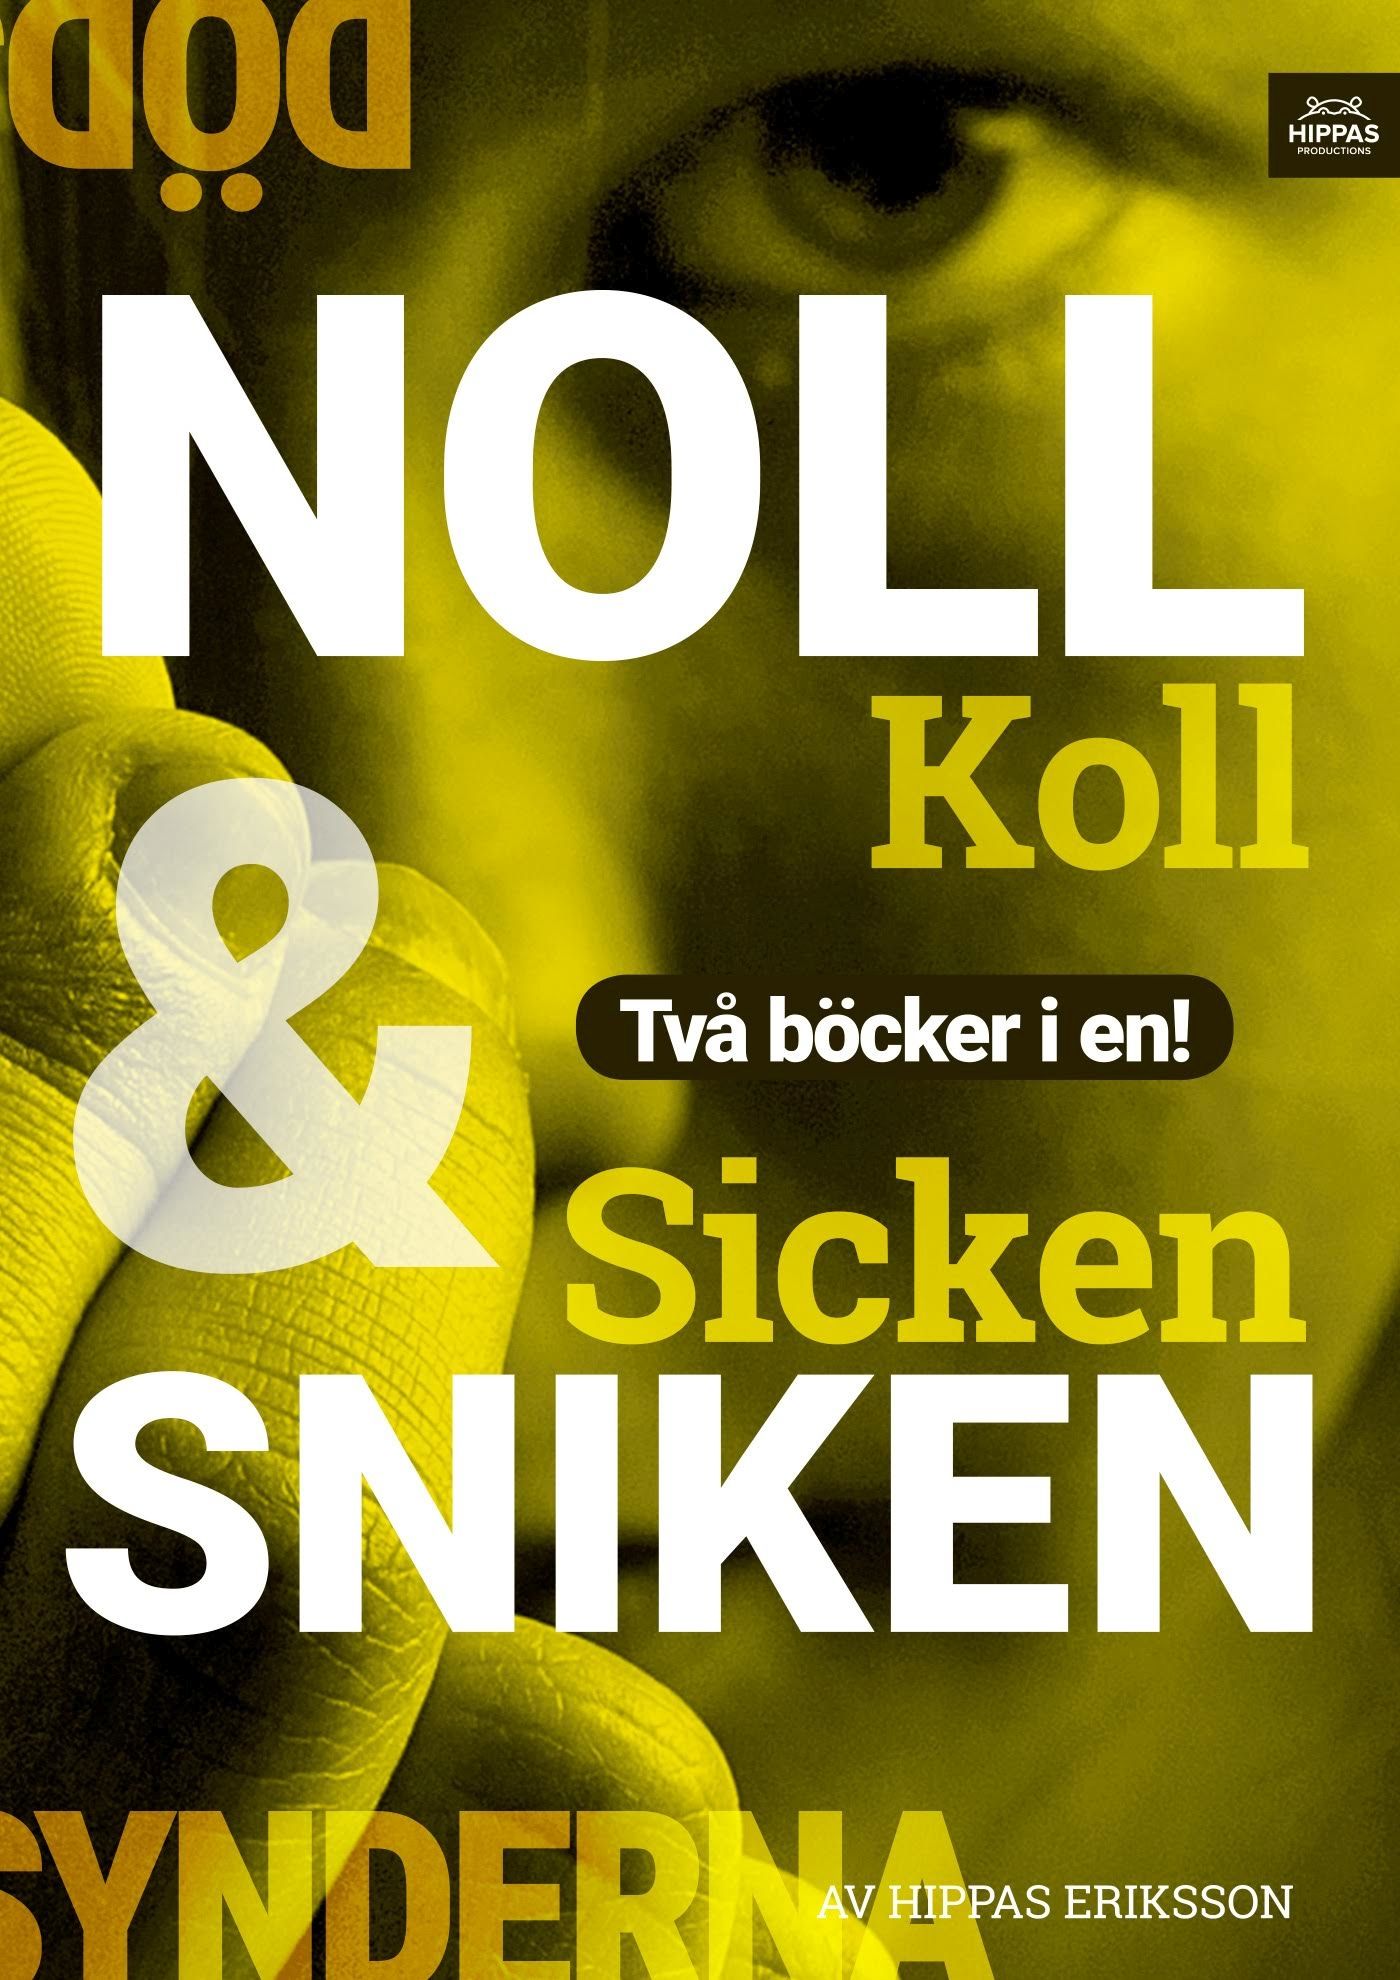 Noll koll / Sicken sniken, eBook by Hippas Eriksson